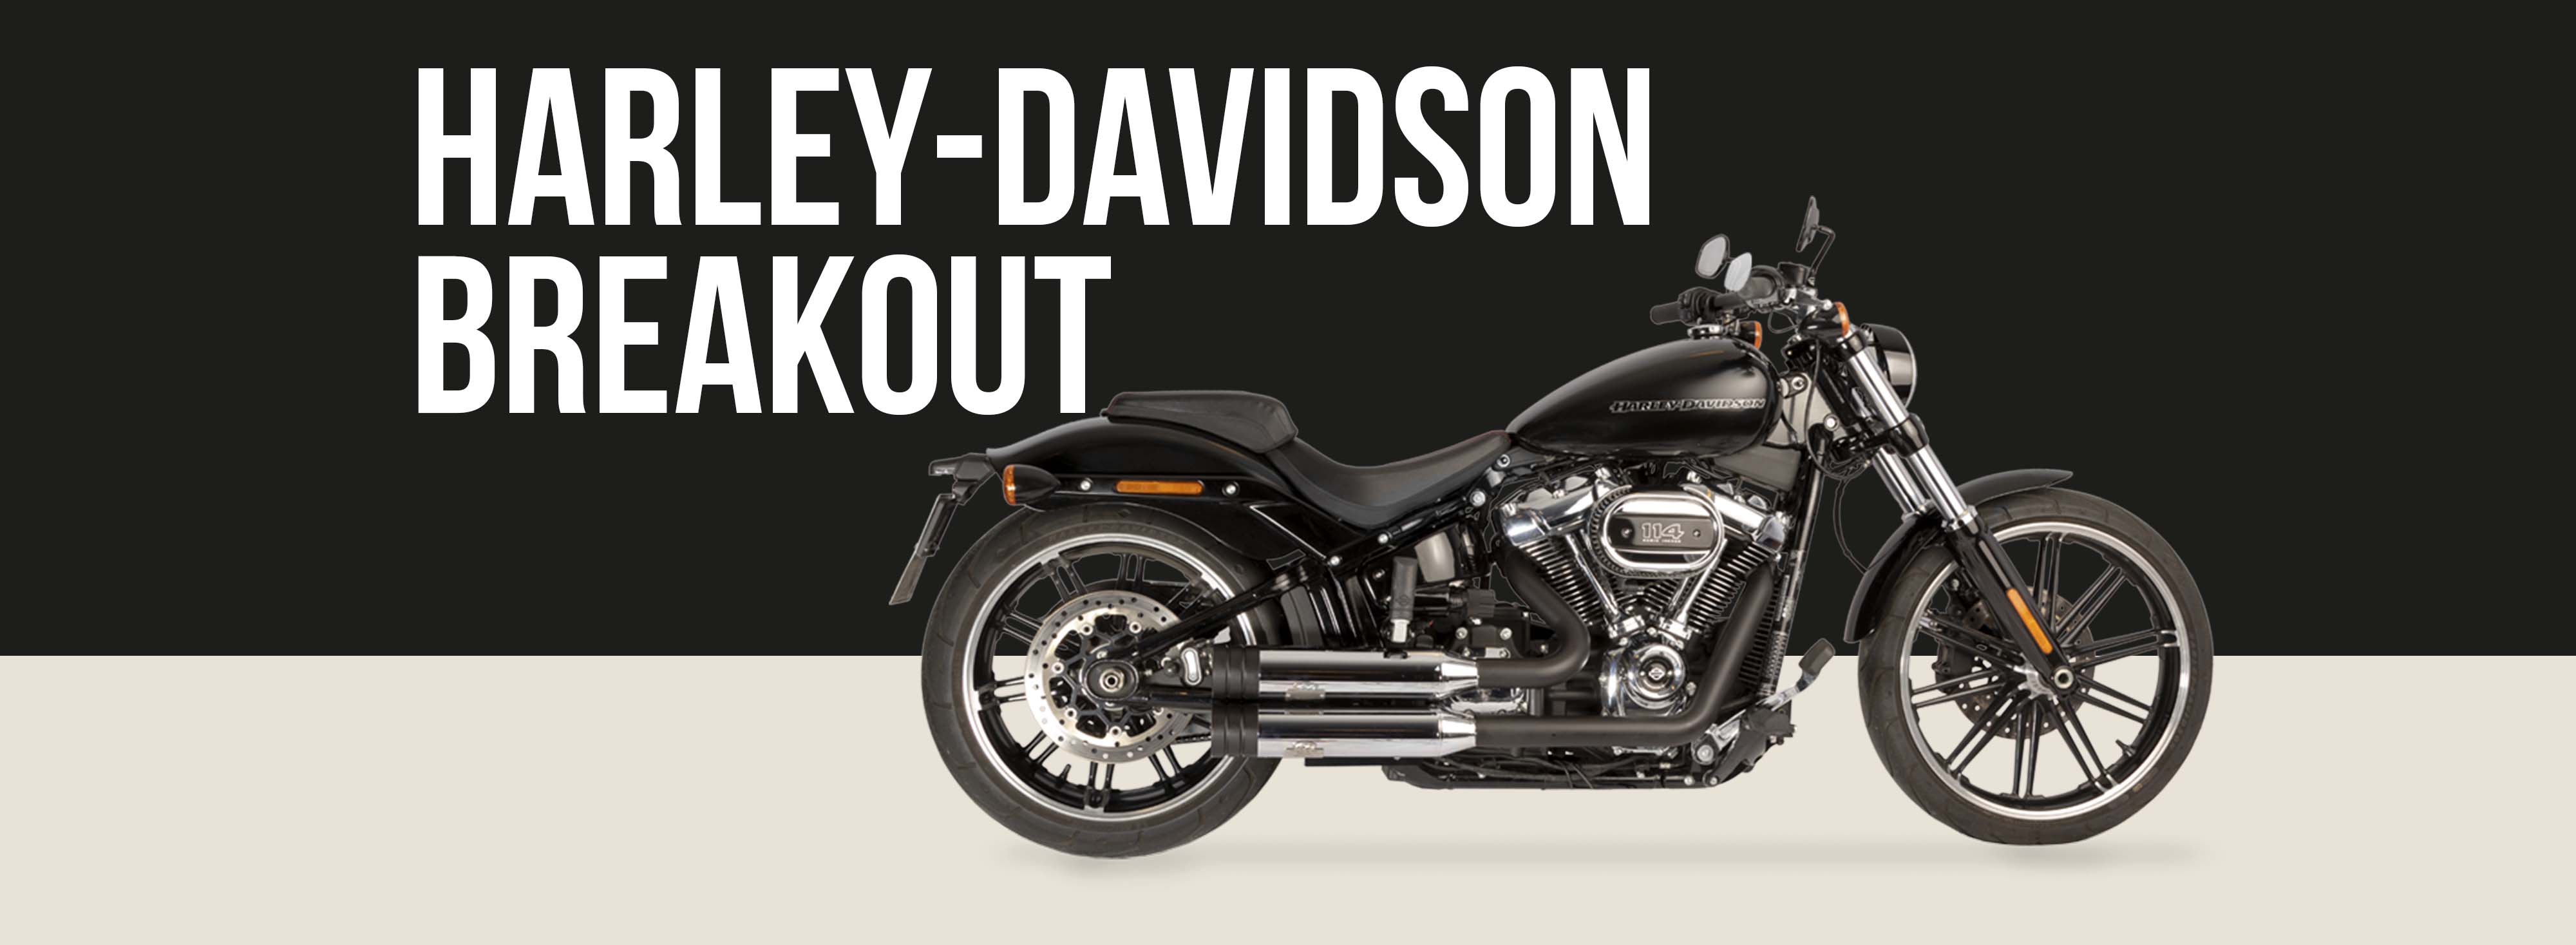 Harley-davidson Breakout Motorcycle Brand Page Header